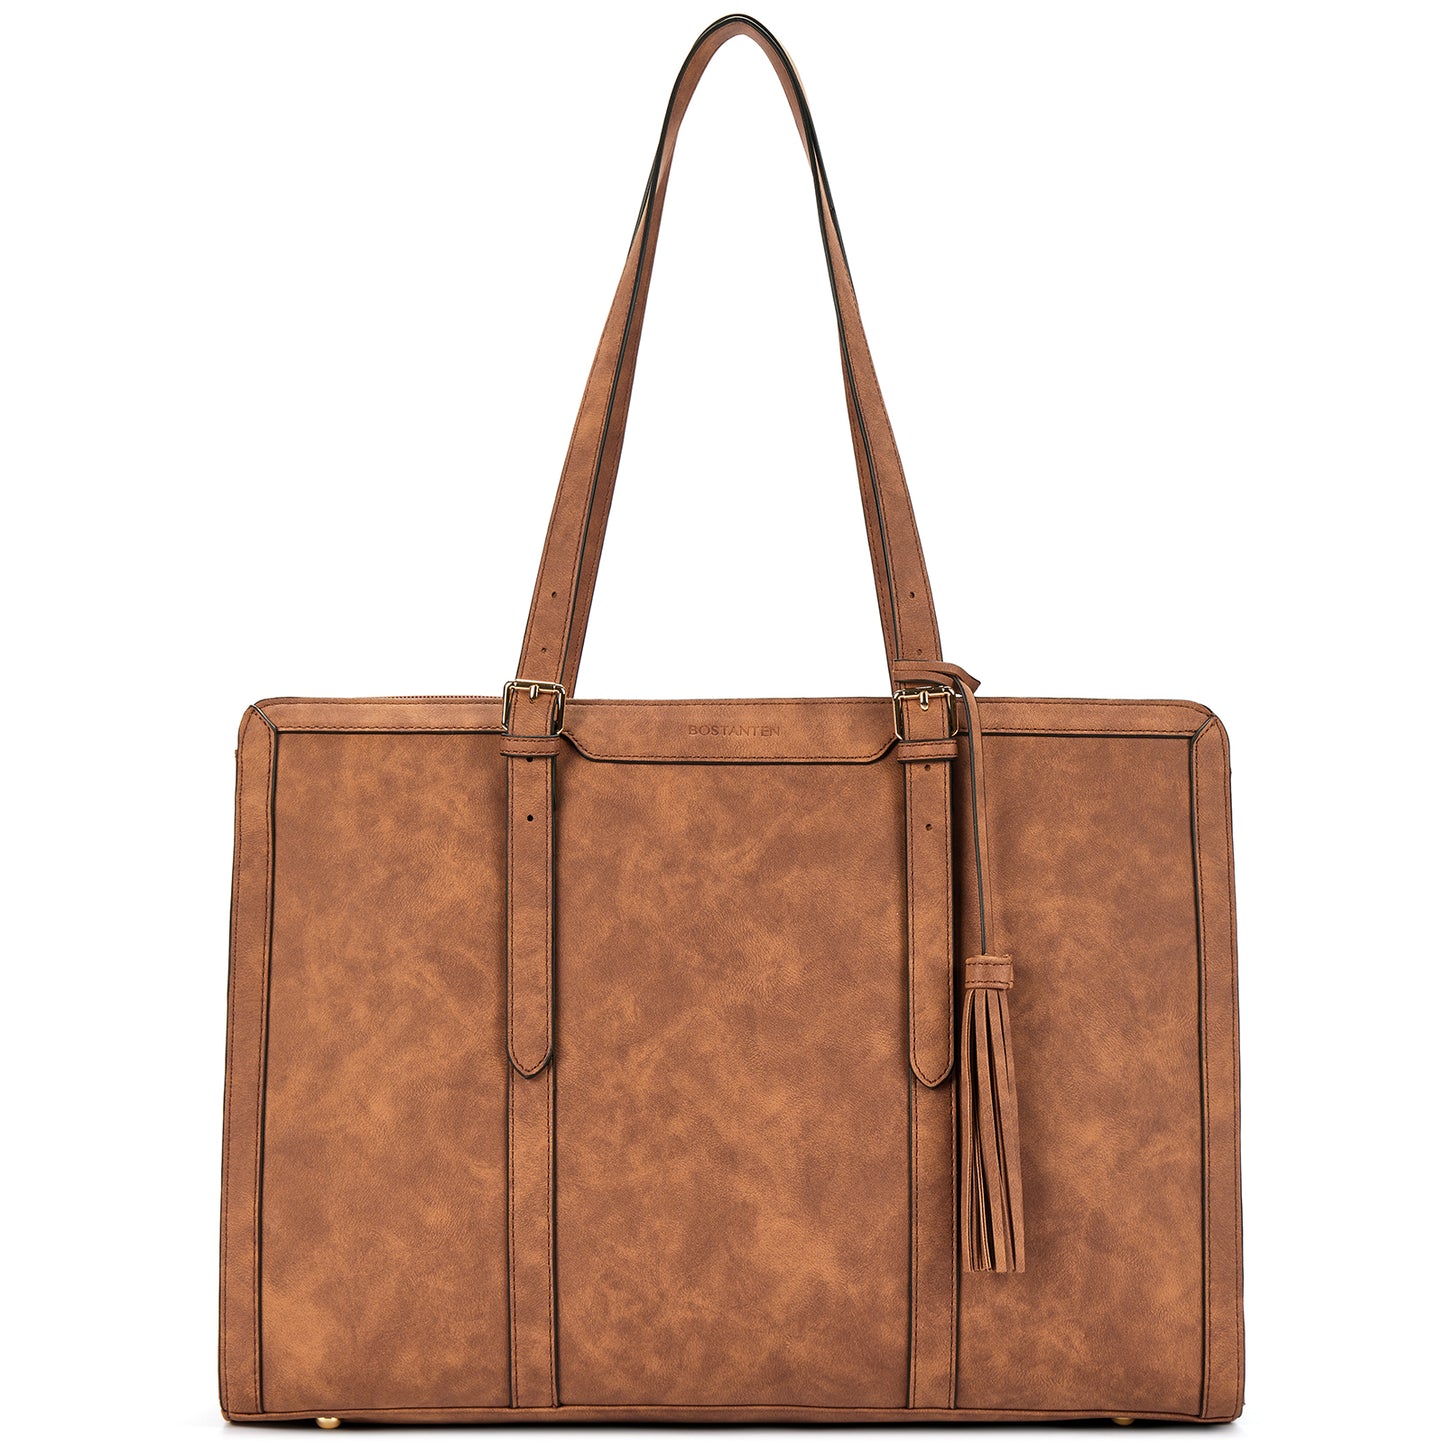 BOSTANTEN Laptop Tote Bag for Women Work Bag Professional 15.6 inch Leather Briefcase Business Office Purse Shoulder Bag